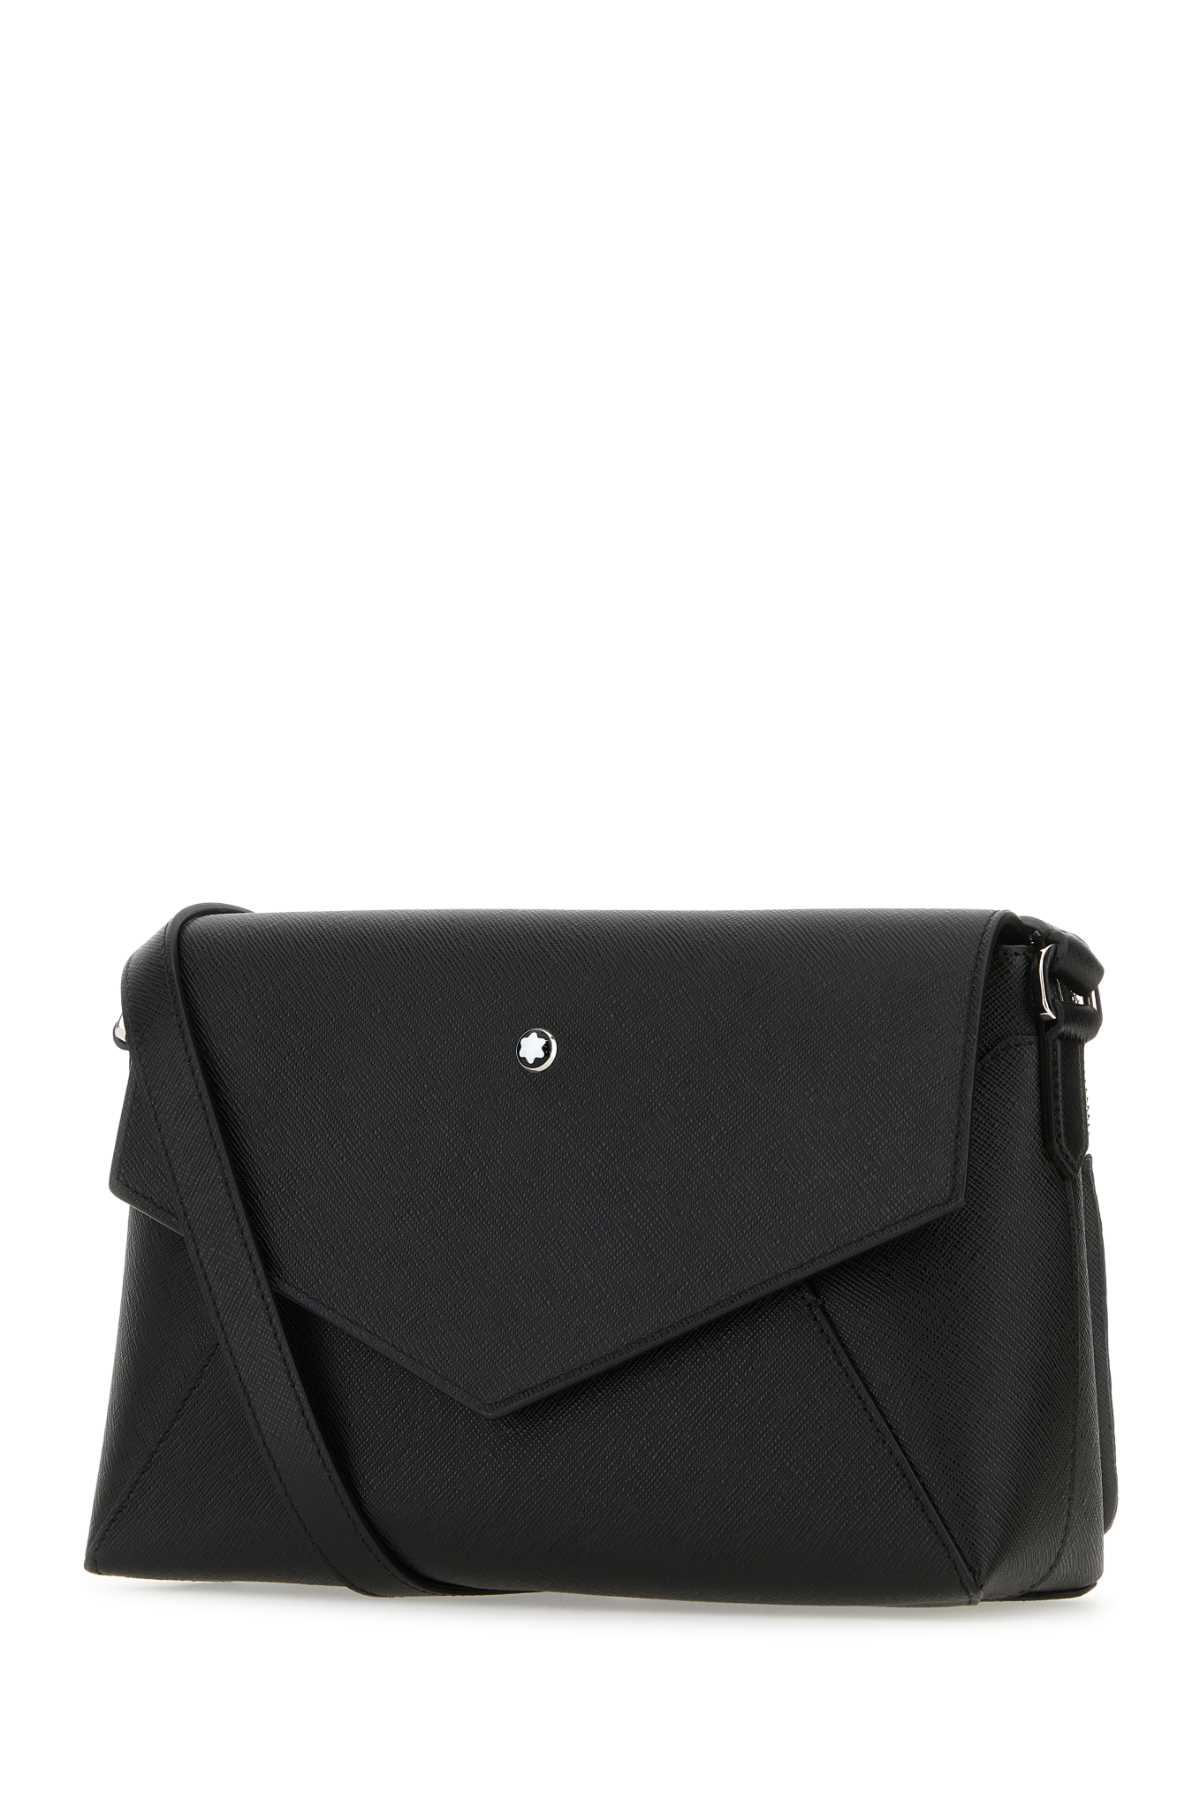 Shop Montblanc Black Leather Crossbody Bag